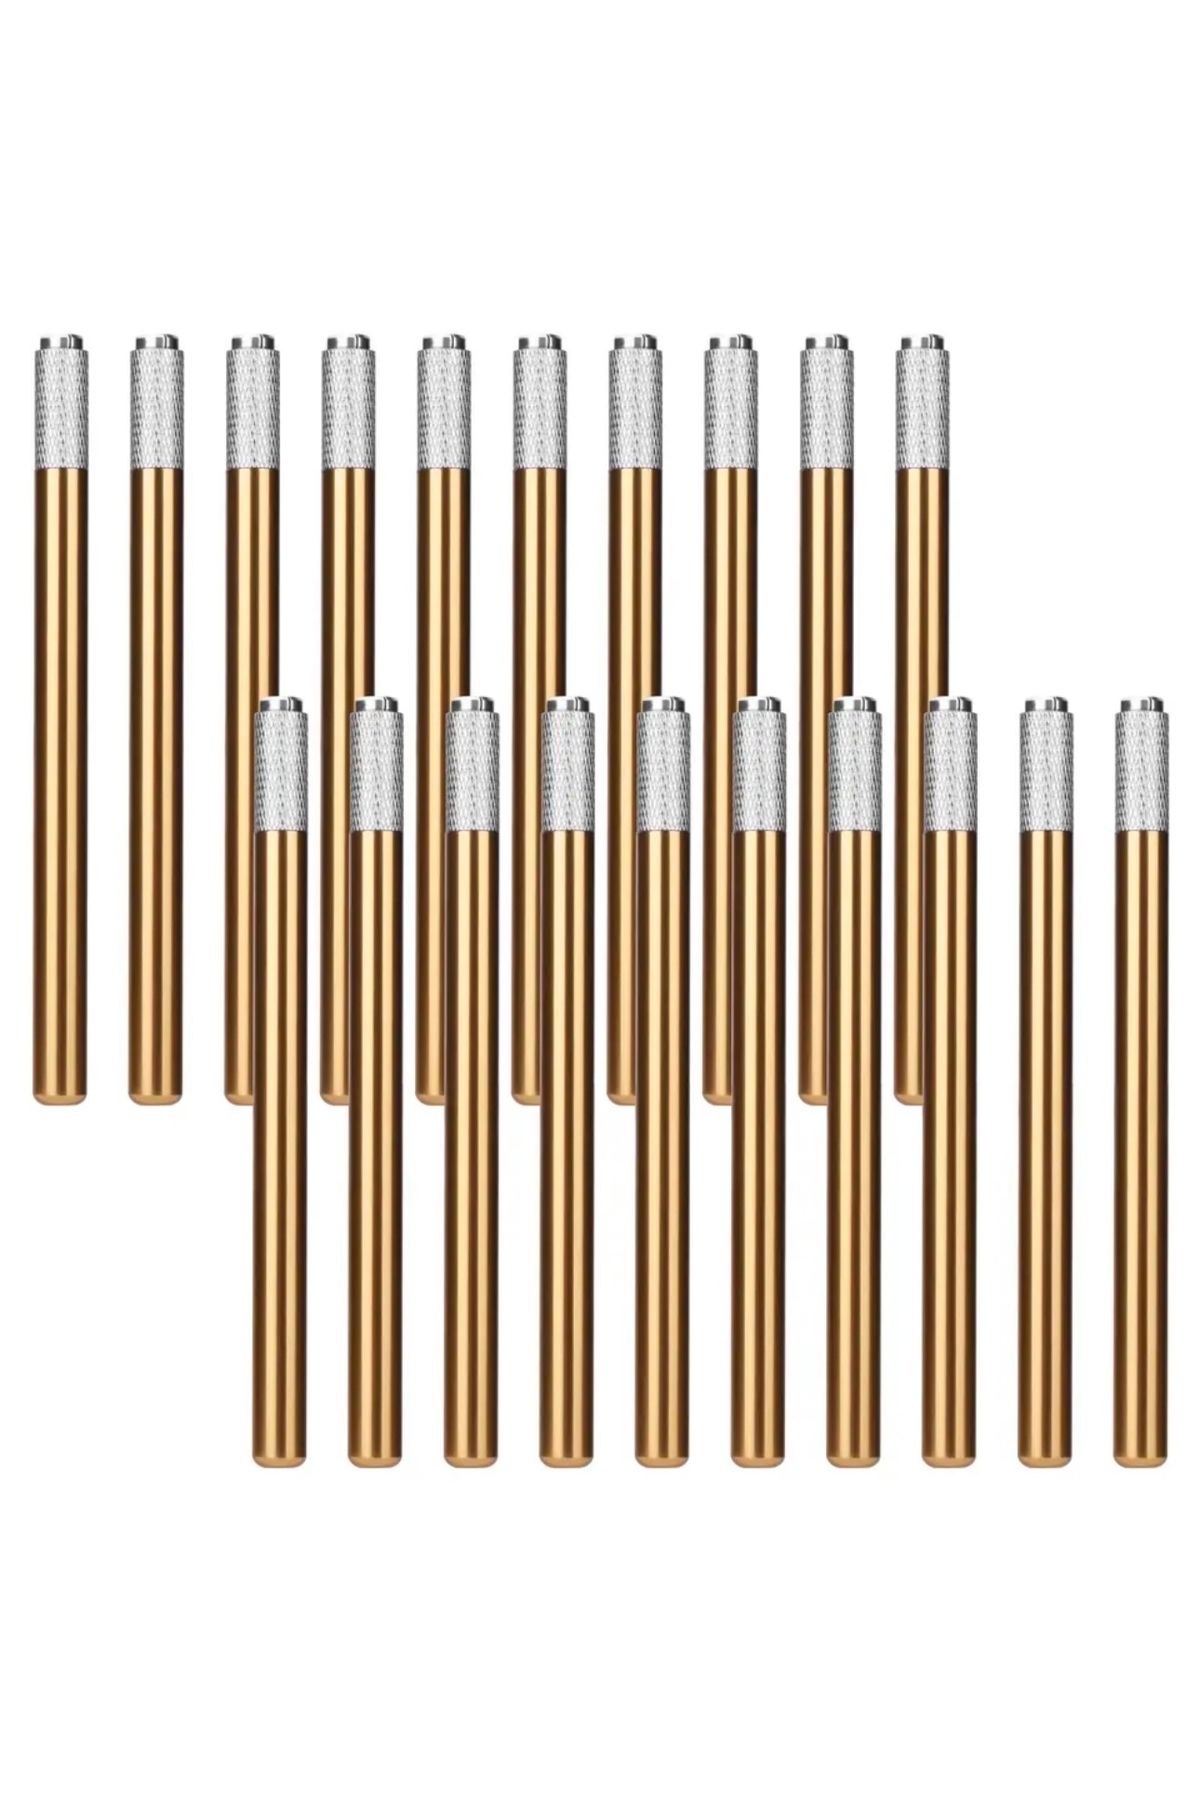 BARANADA professional Microblading kaş kalemi 2 adet